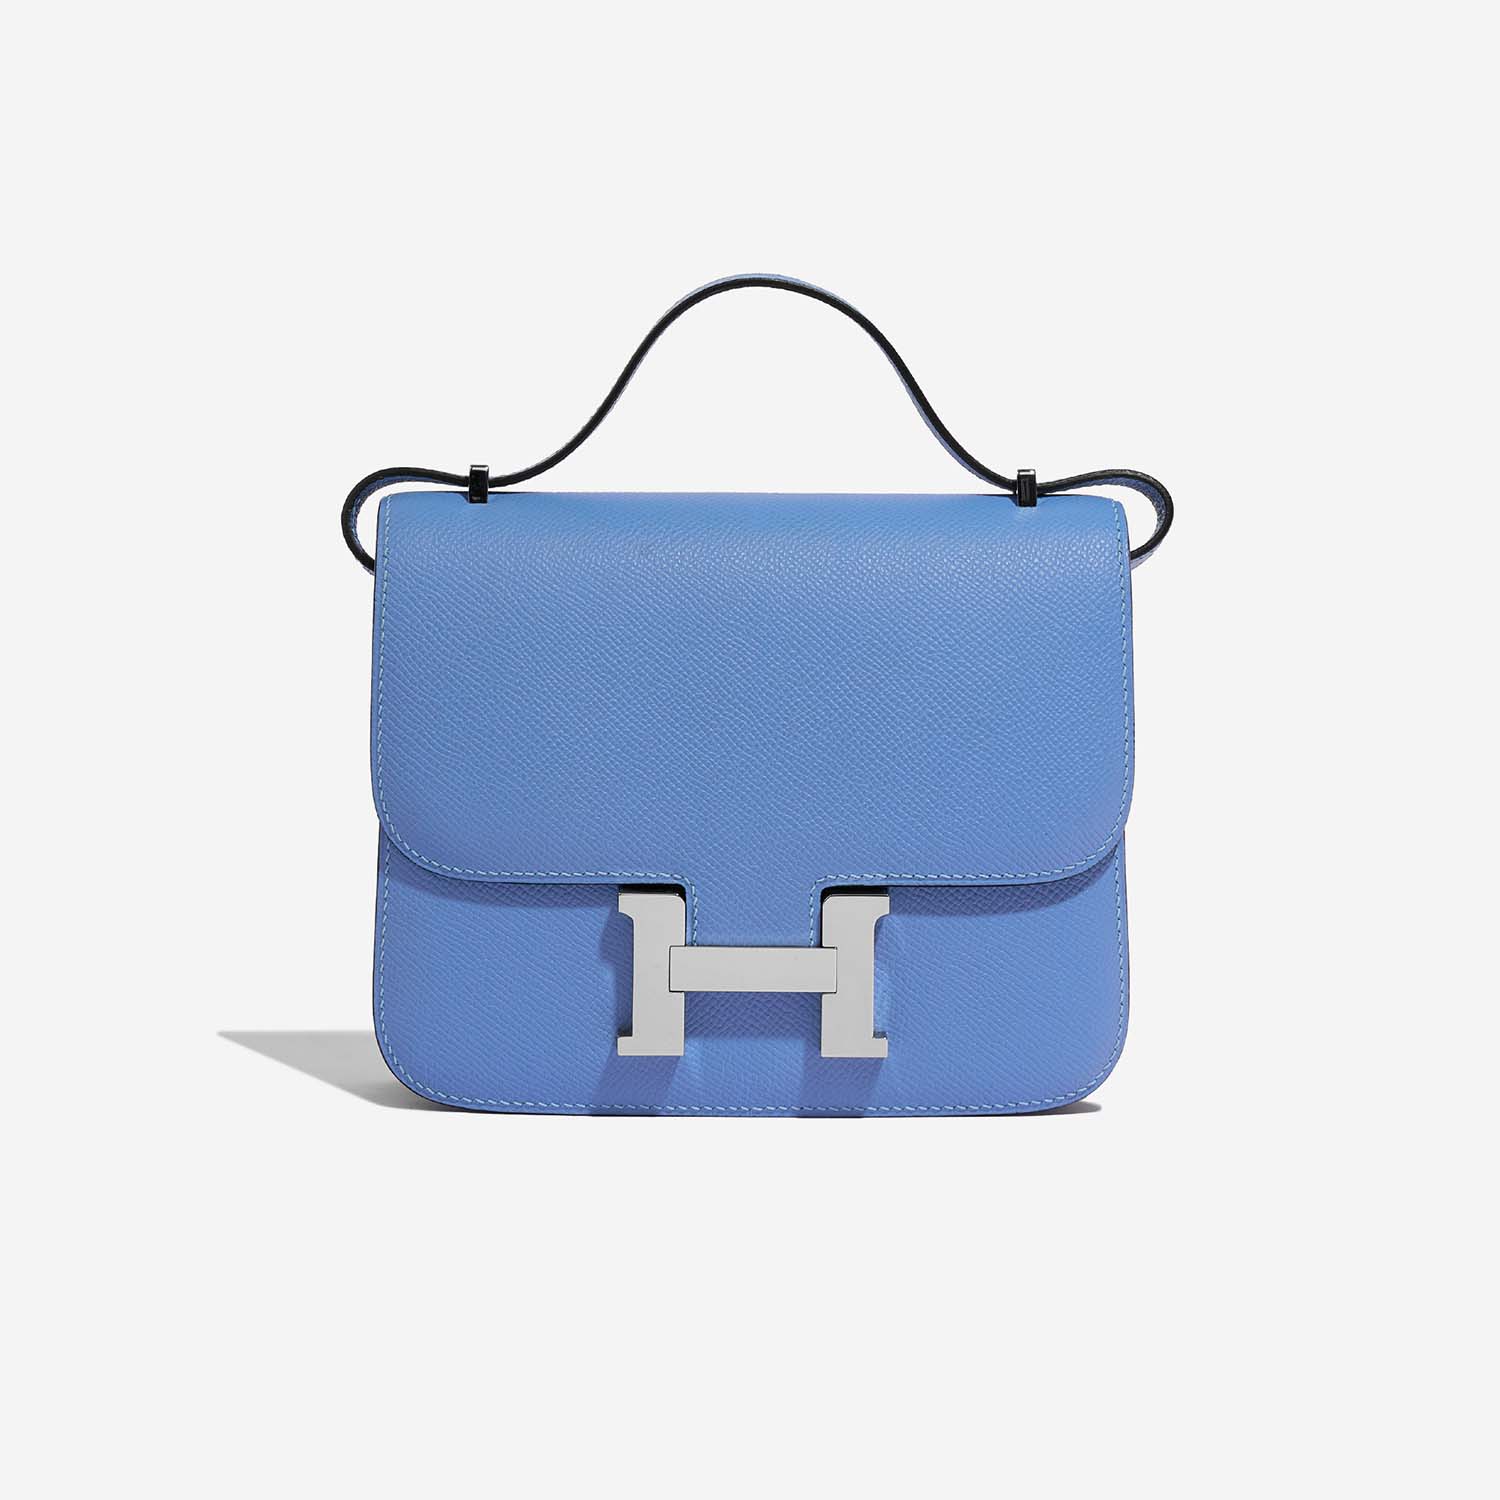 Hermes Constance small shoulder bag in blue du nord Swift leather